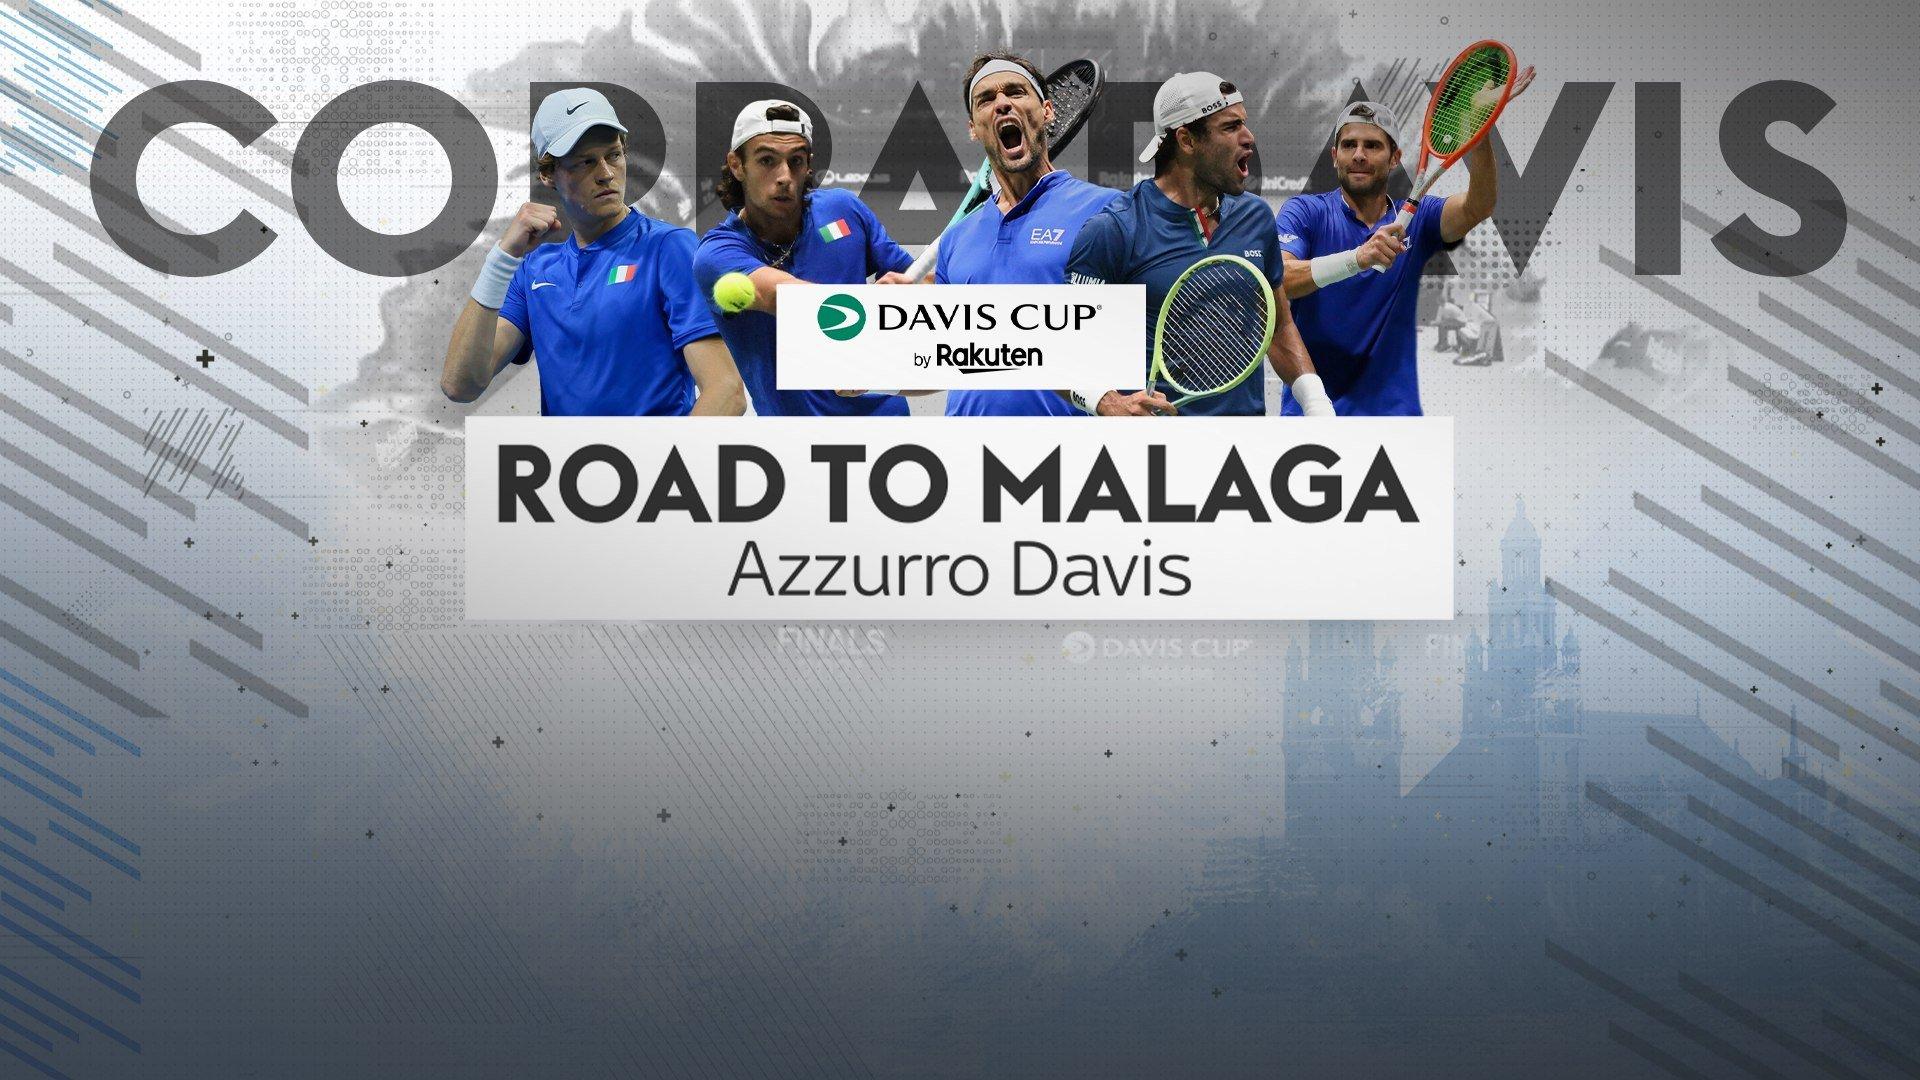 Road to Malaga - Azzurro Davis